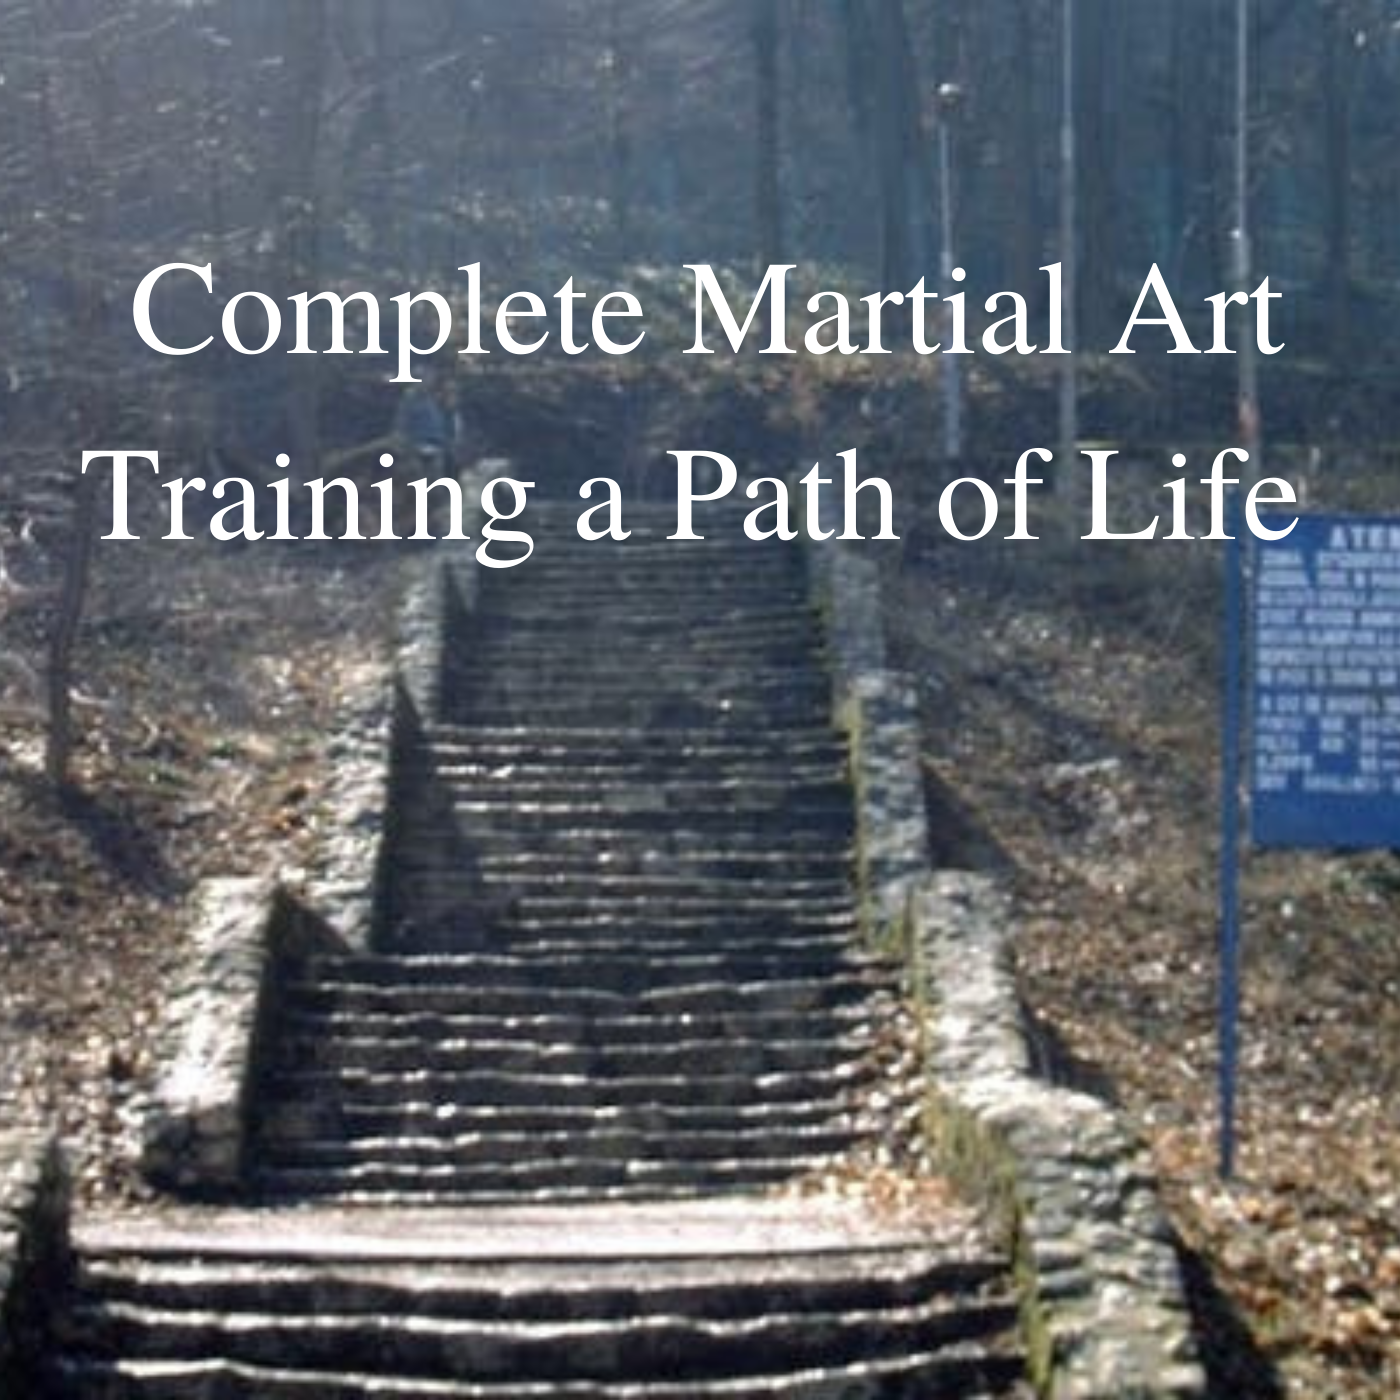 * Complete Martial Art Training 